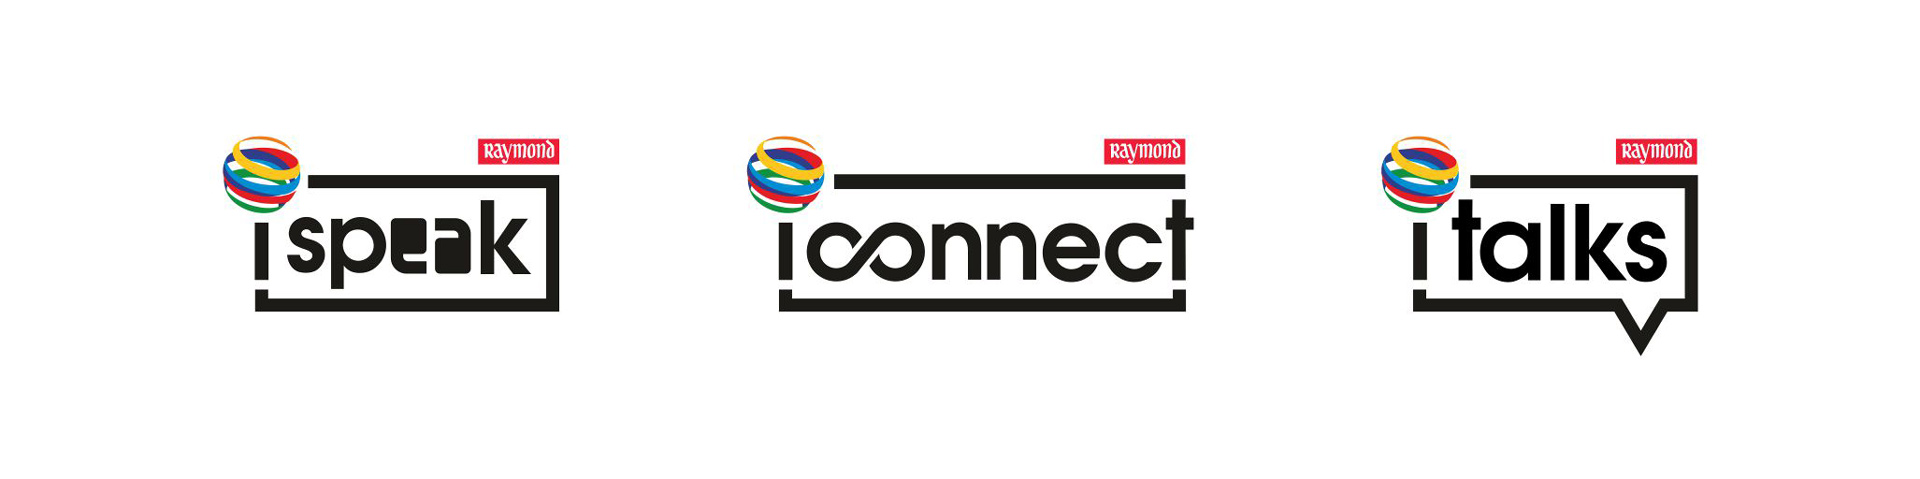  Raymond interchange 16 speak connect and talks logo designs